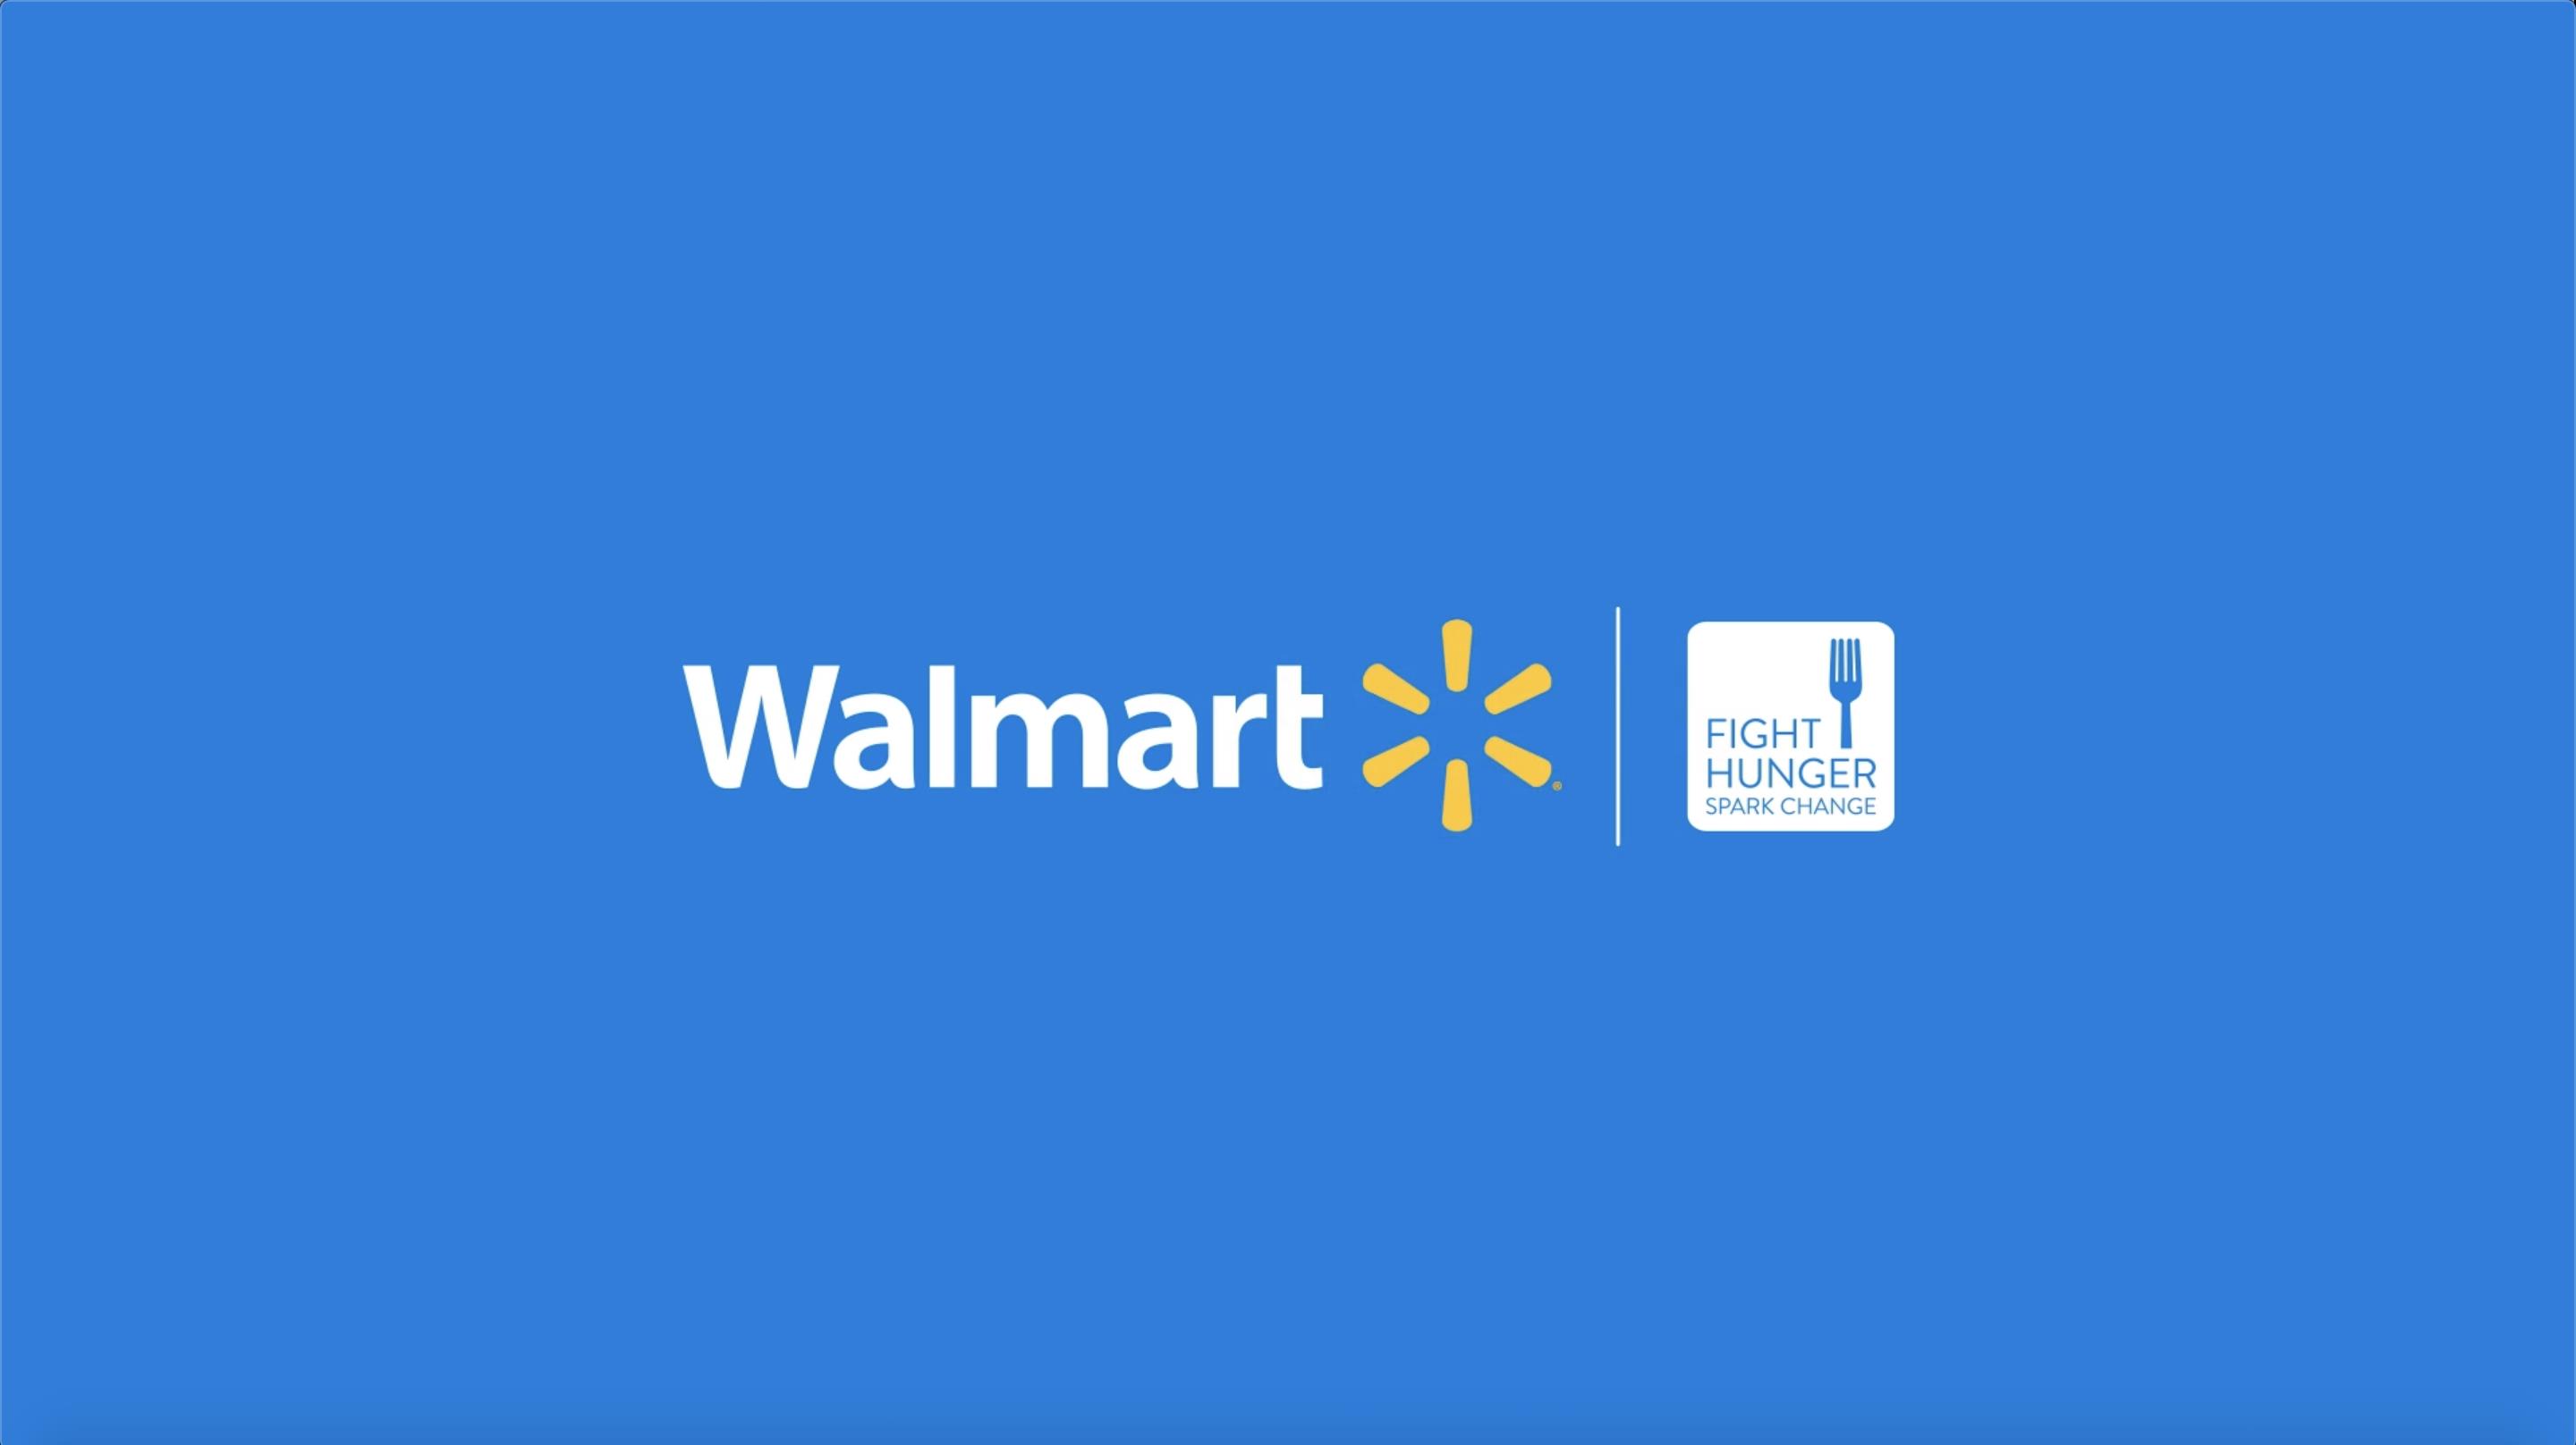 Walmart x Fight Hunger Spark Change "Gloria"